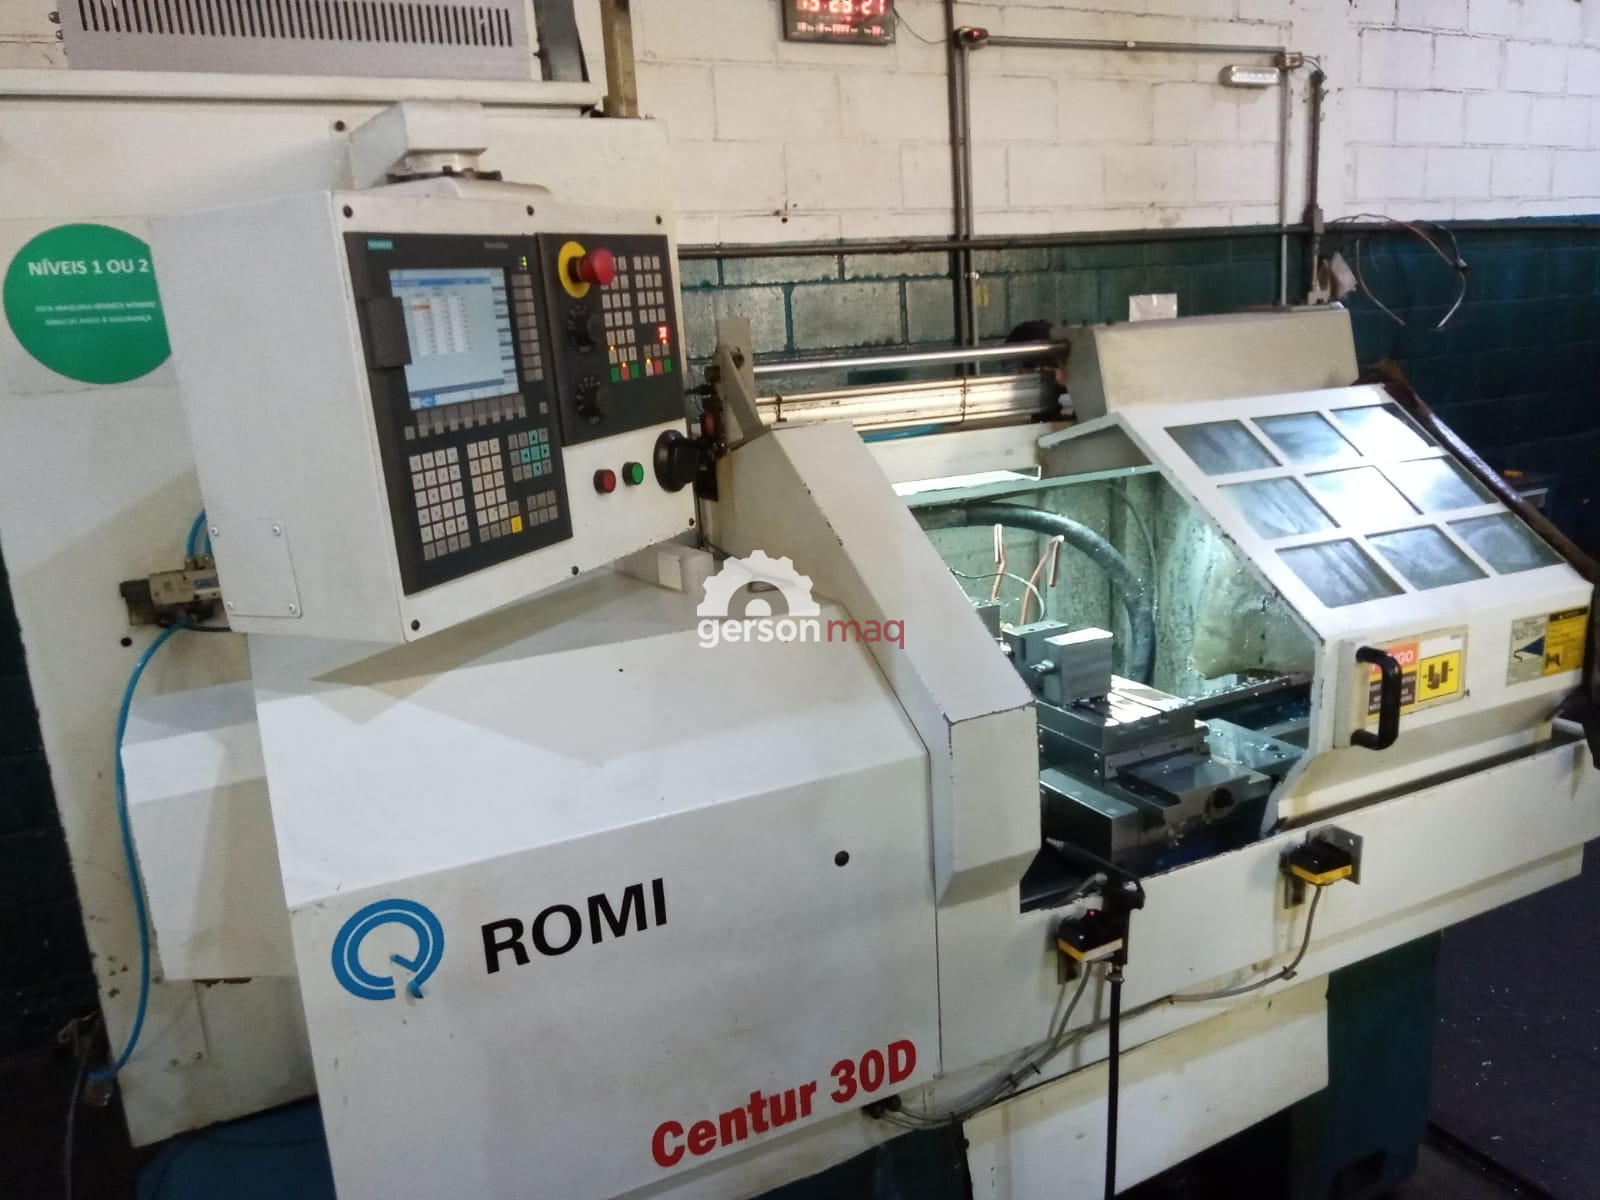 Torno CNC marca Romi modelo Centur 30D (Ø x Comp) 430 x 500 mm